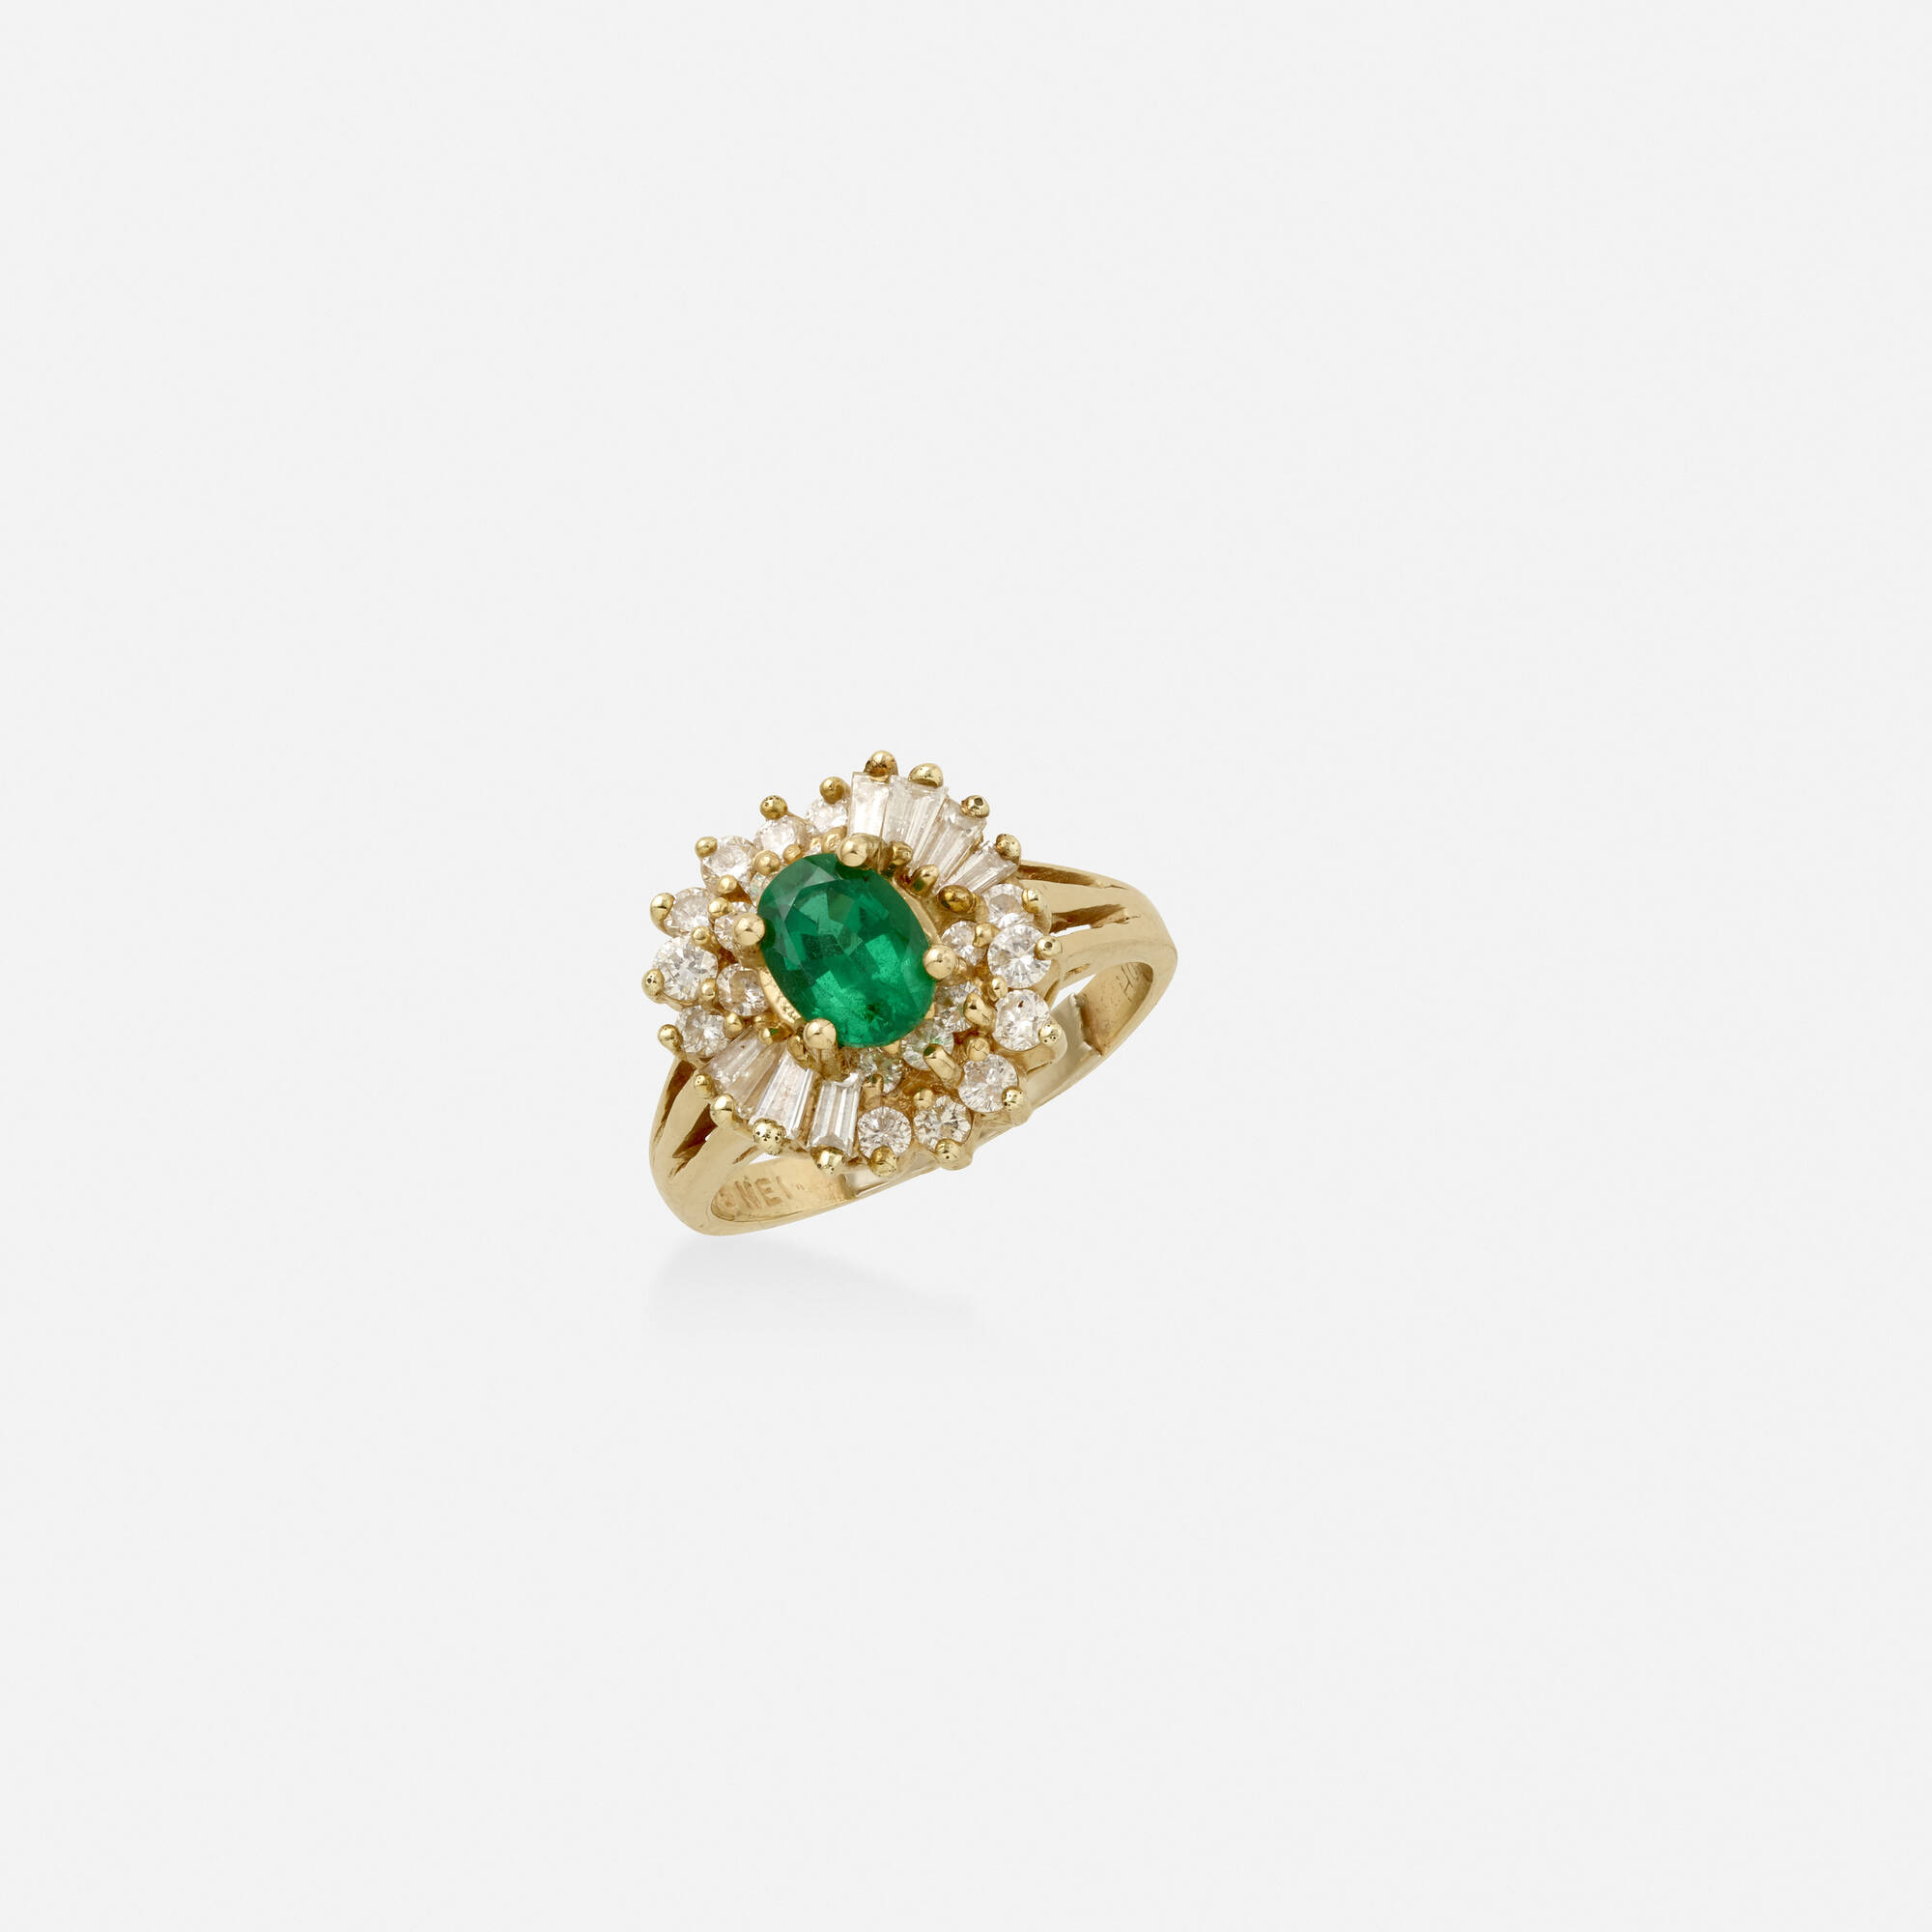 356: Emerald, diamond, and gold ballerina ring